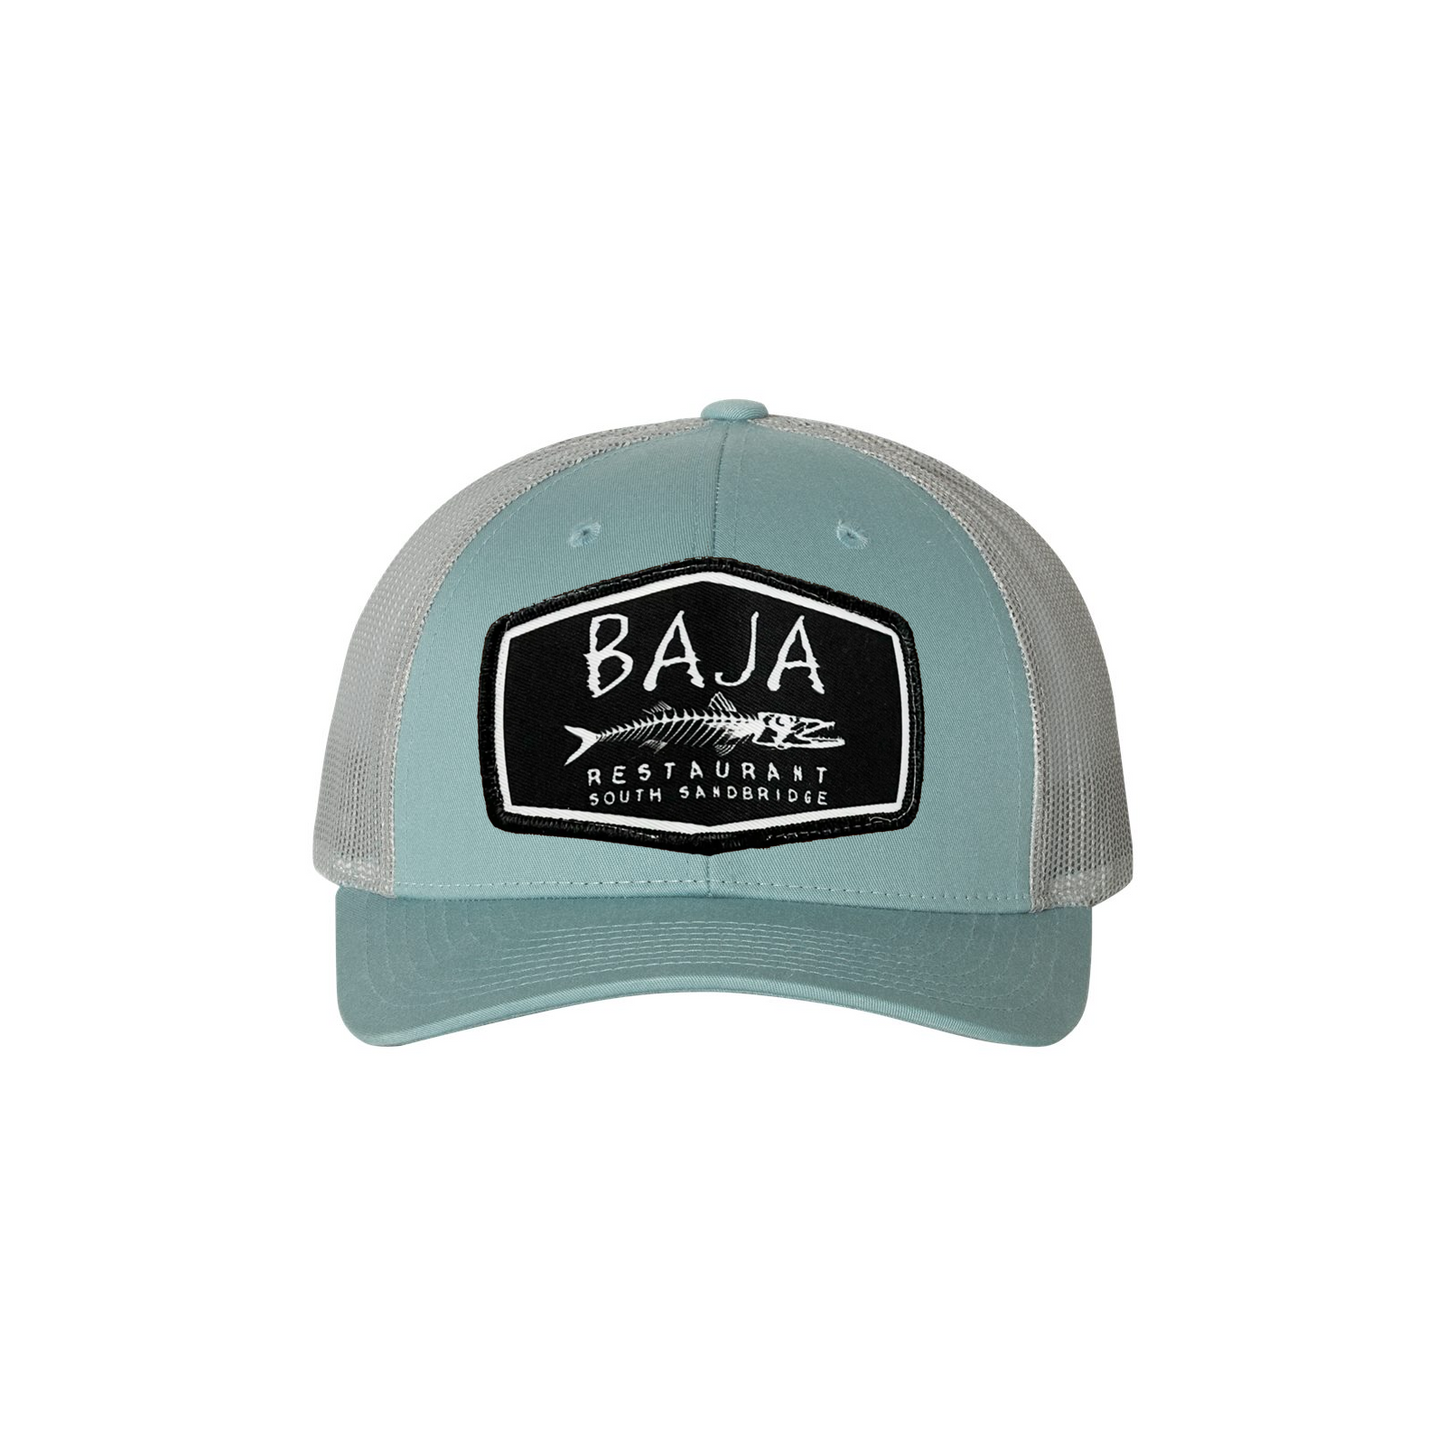 Baja Restaurant (Applique Embroidered Patch) - Trucker Hat (Richardson 115 - Smoke Blue/Aluminum)